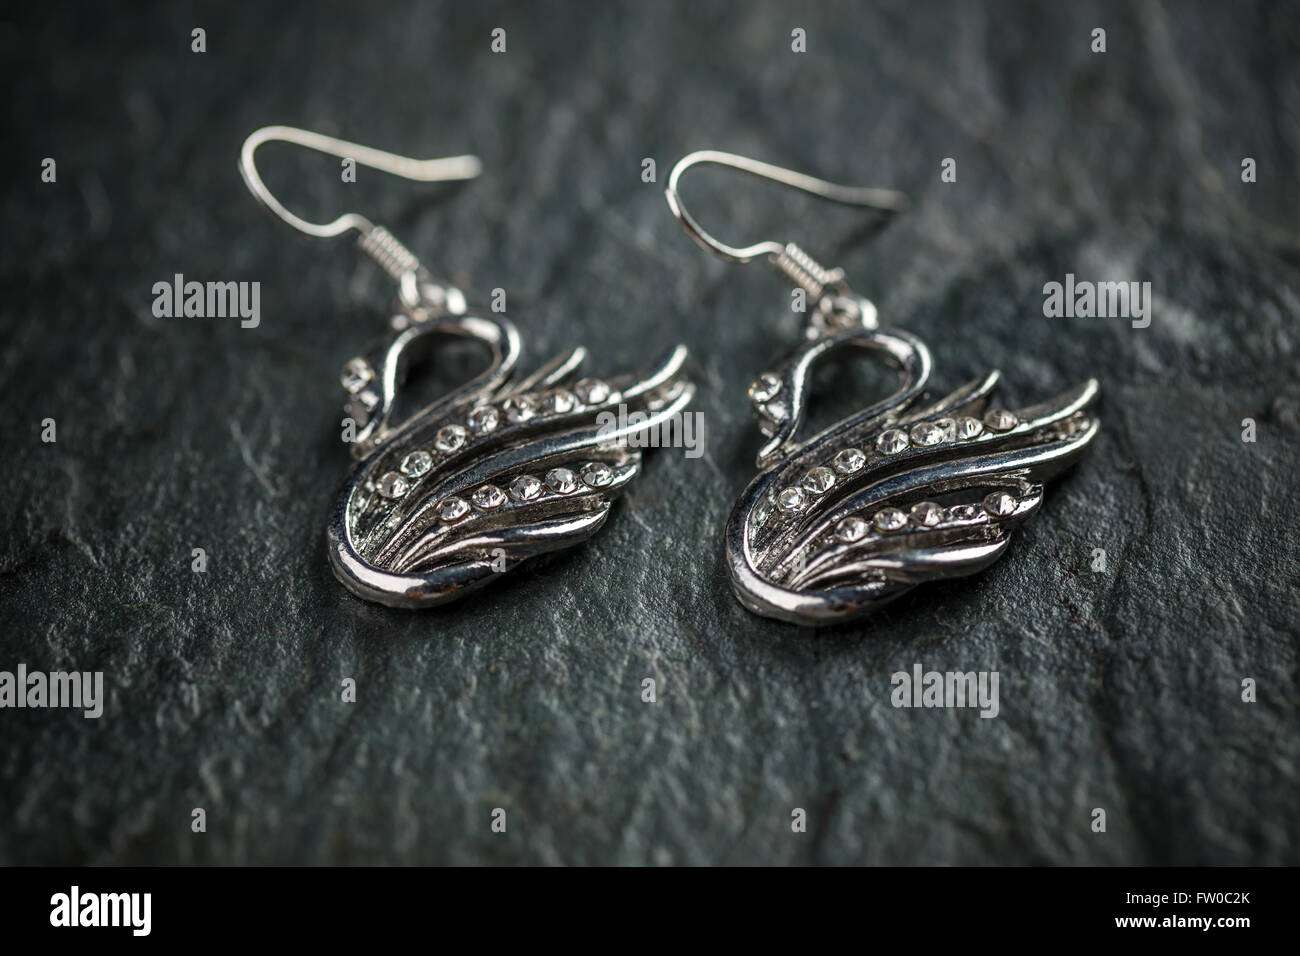 Swan shaped metal earrings on dark background Stock Photo